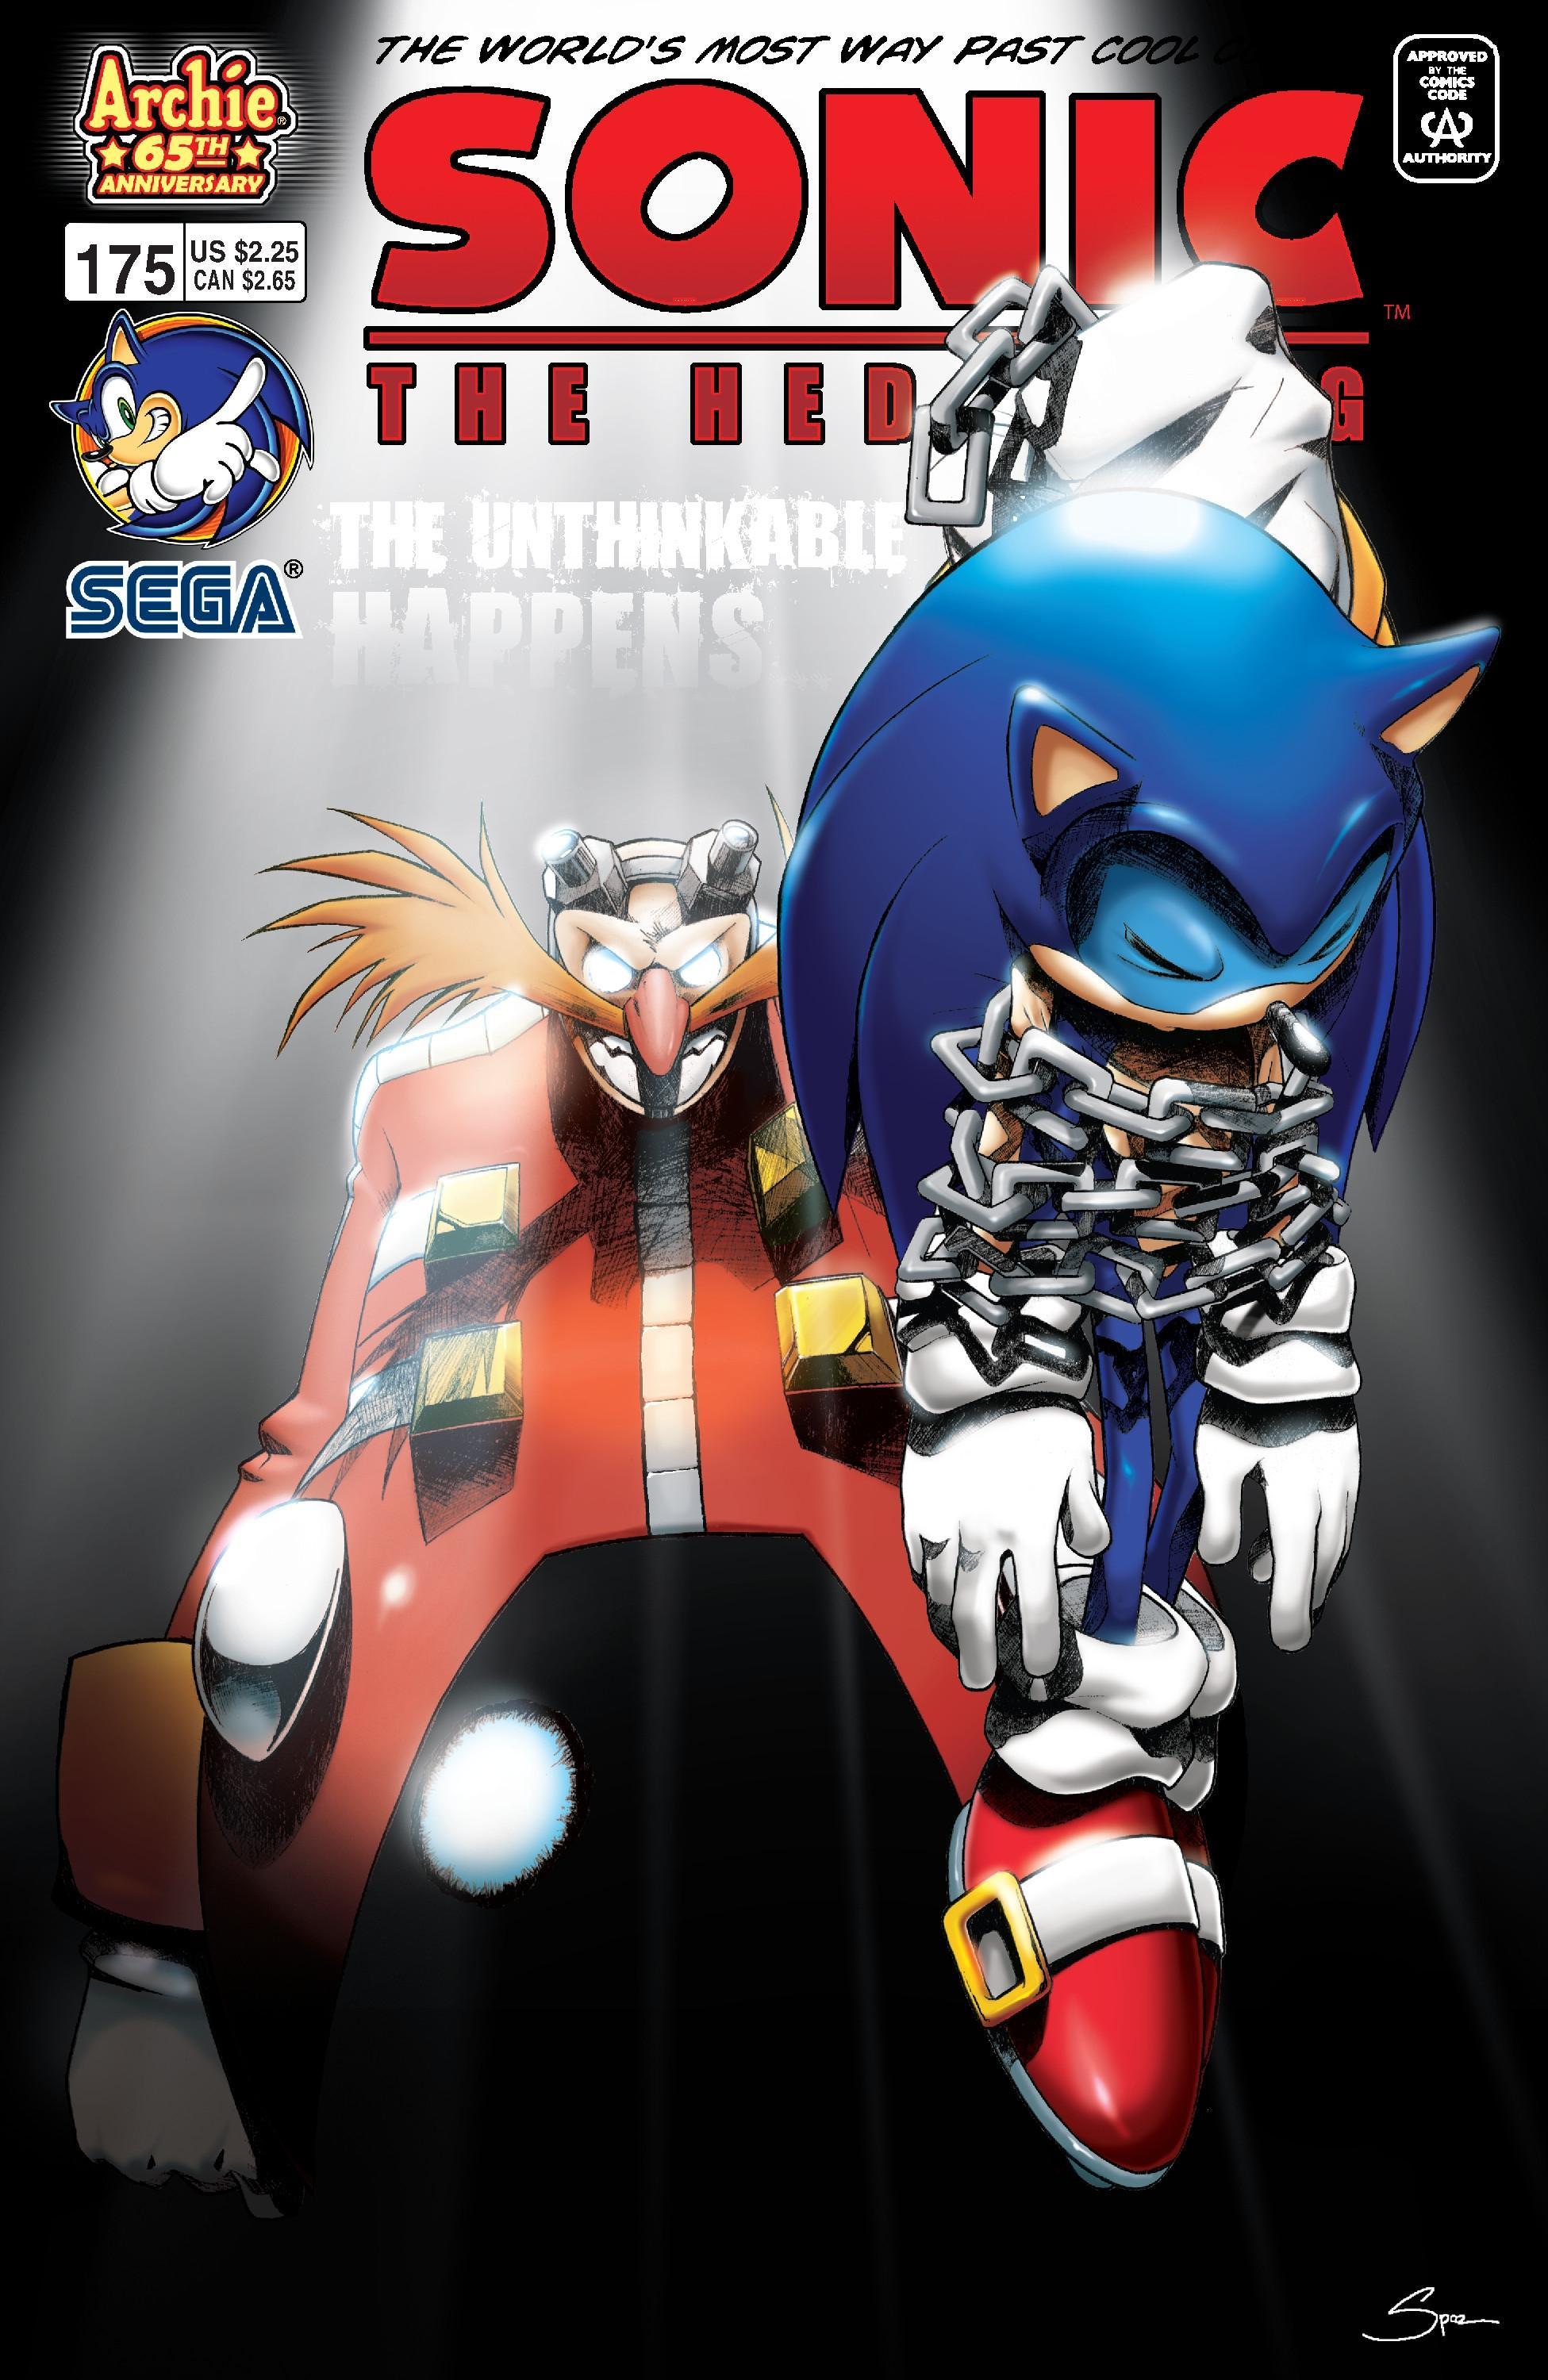 Hipster Hotline: Sonic the Hedgehog (comics reboot)